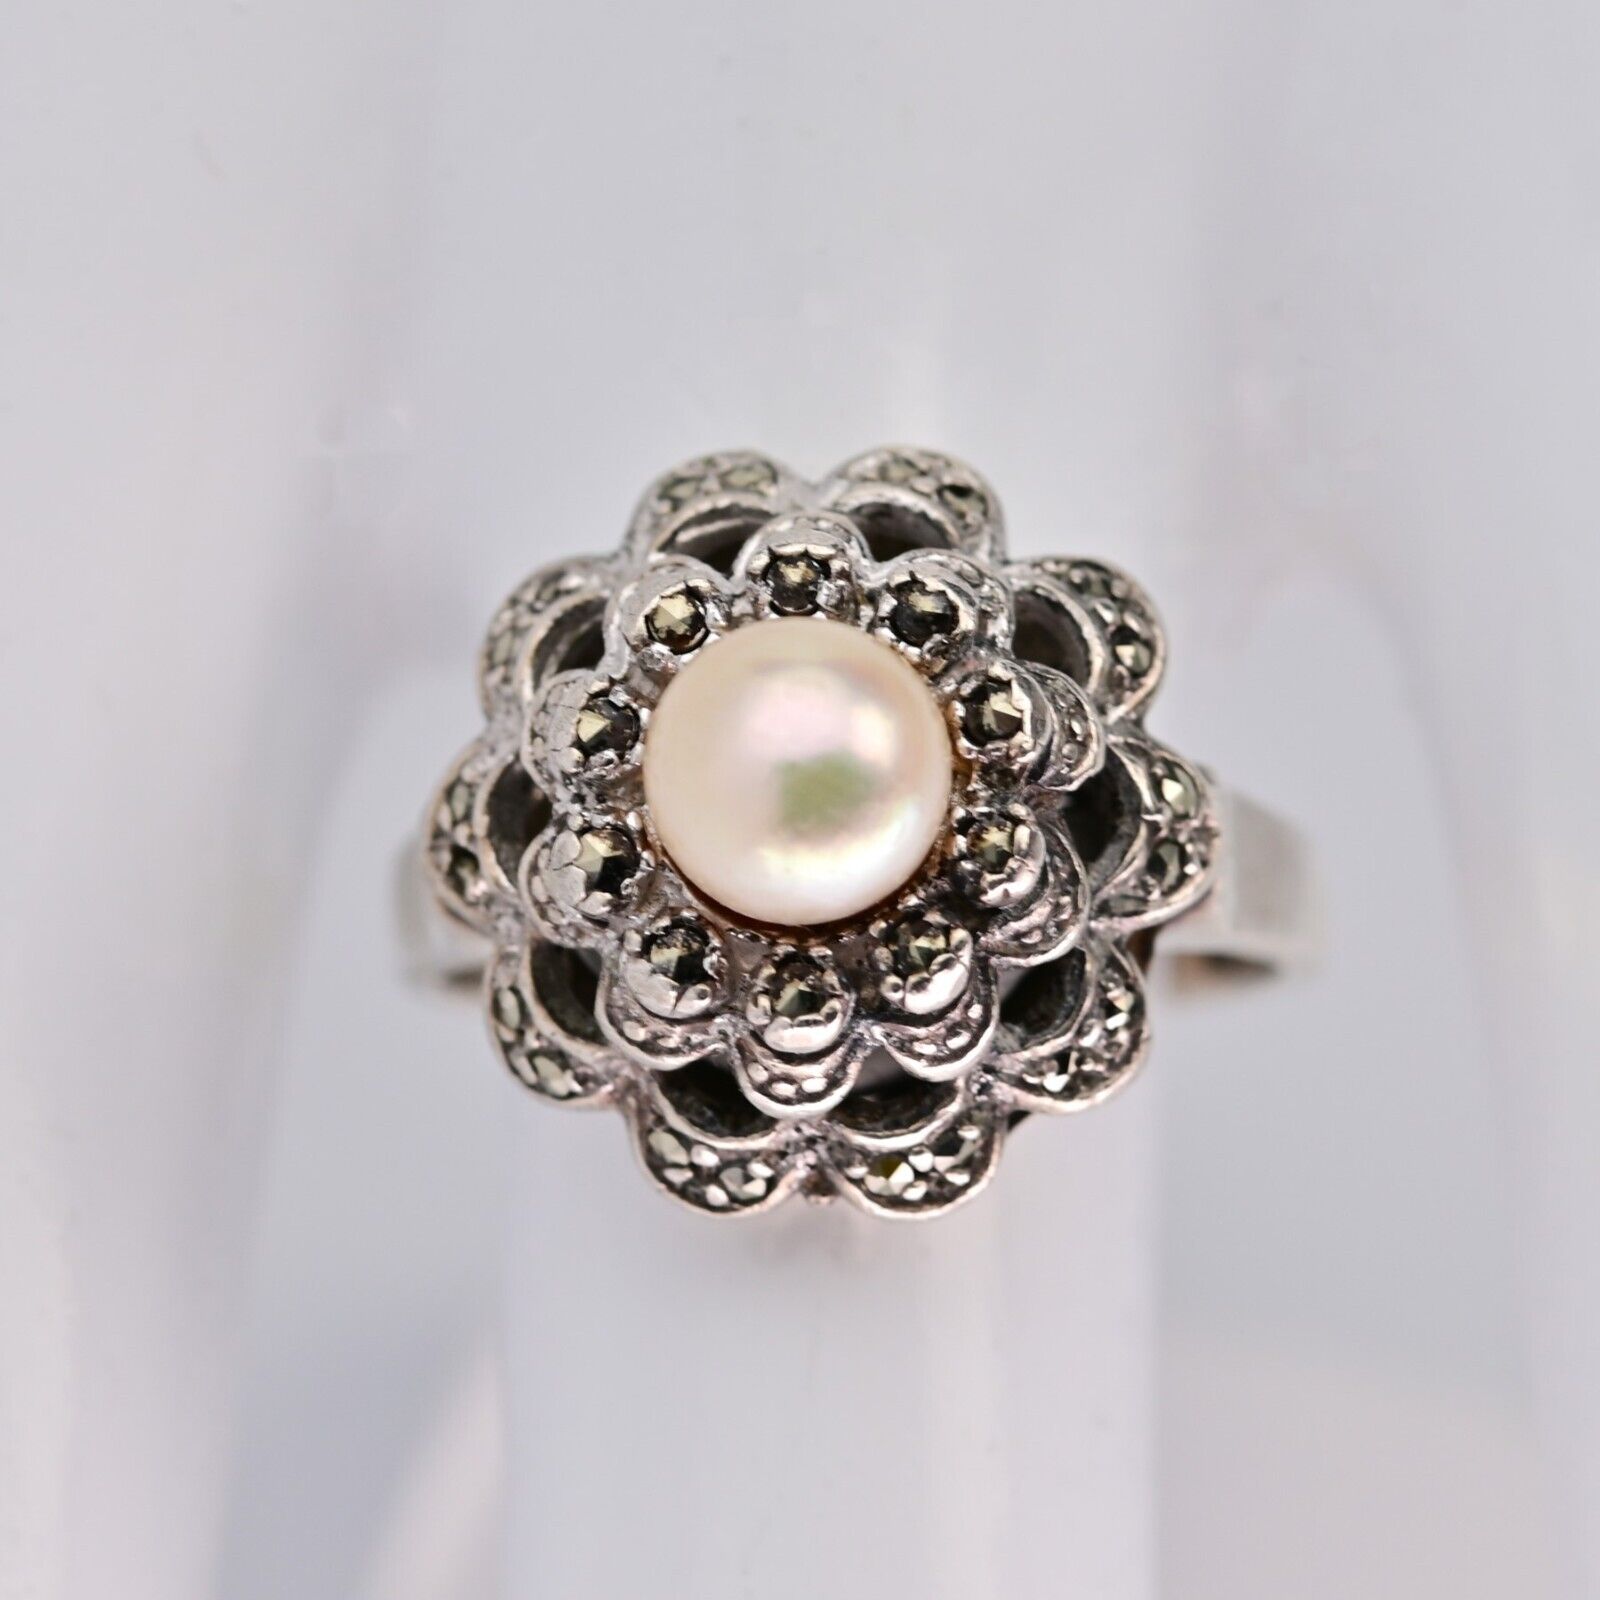 Antique Original Vintage Signed Sterling Silver Marcasite Princess Pearl Ring